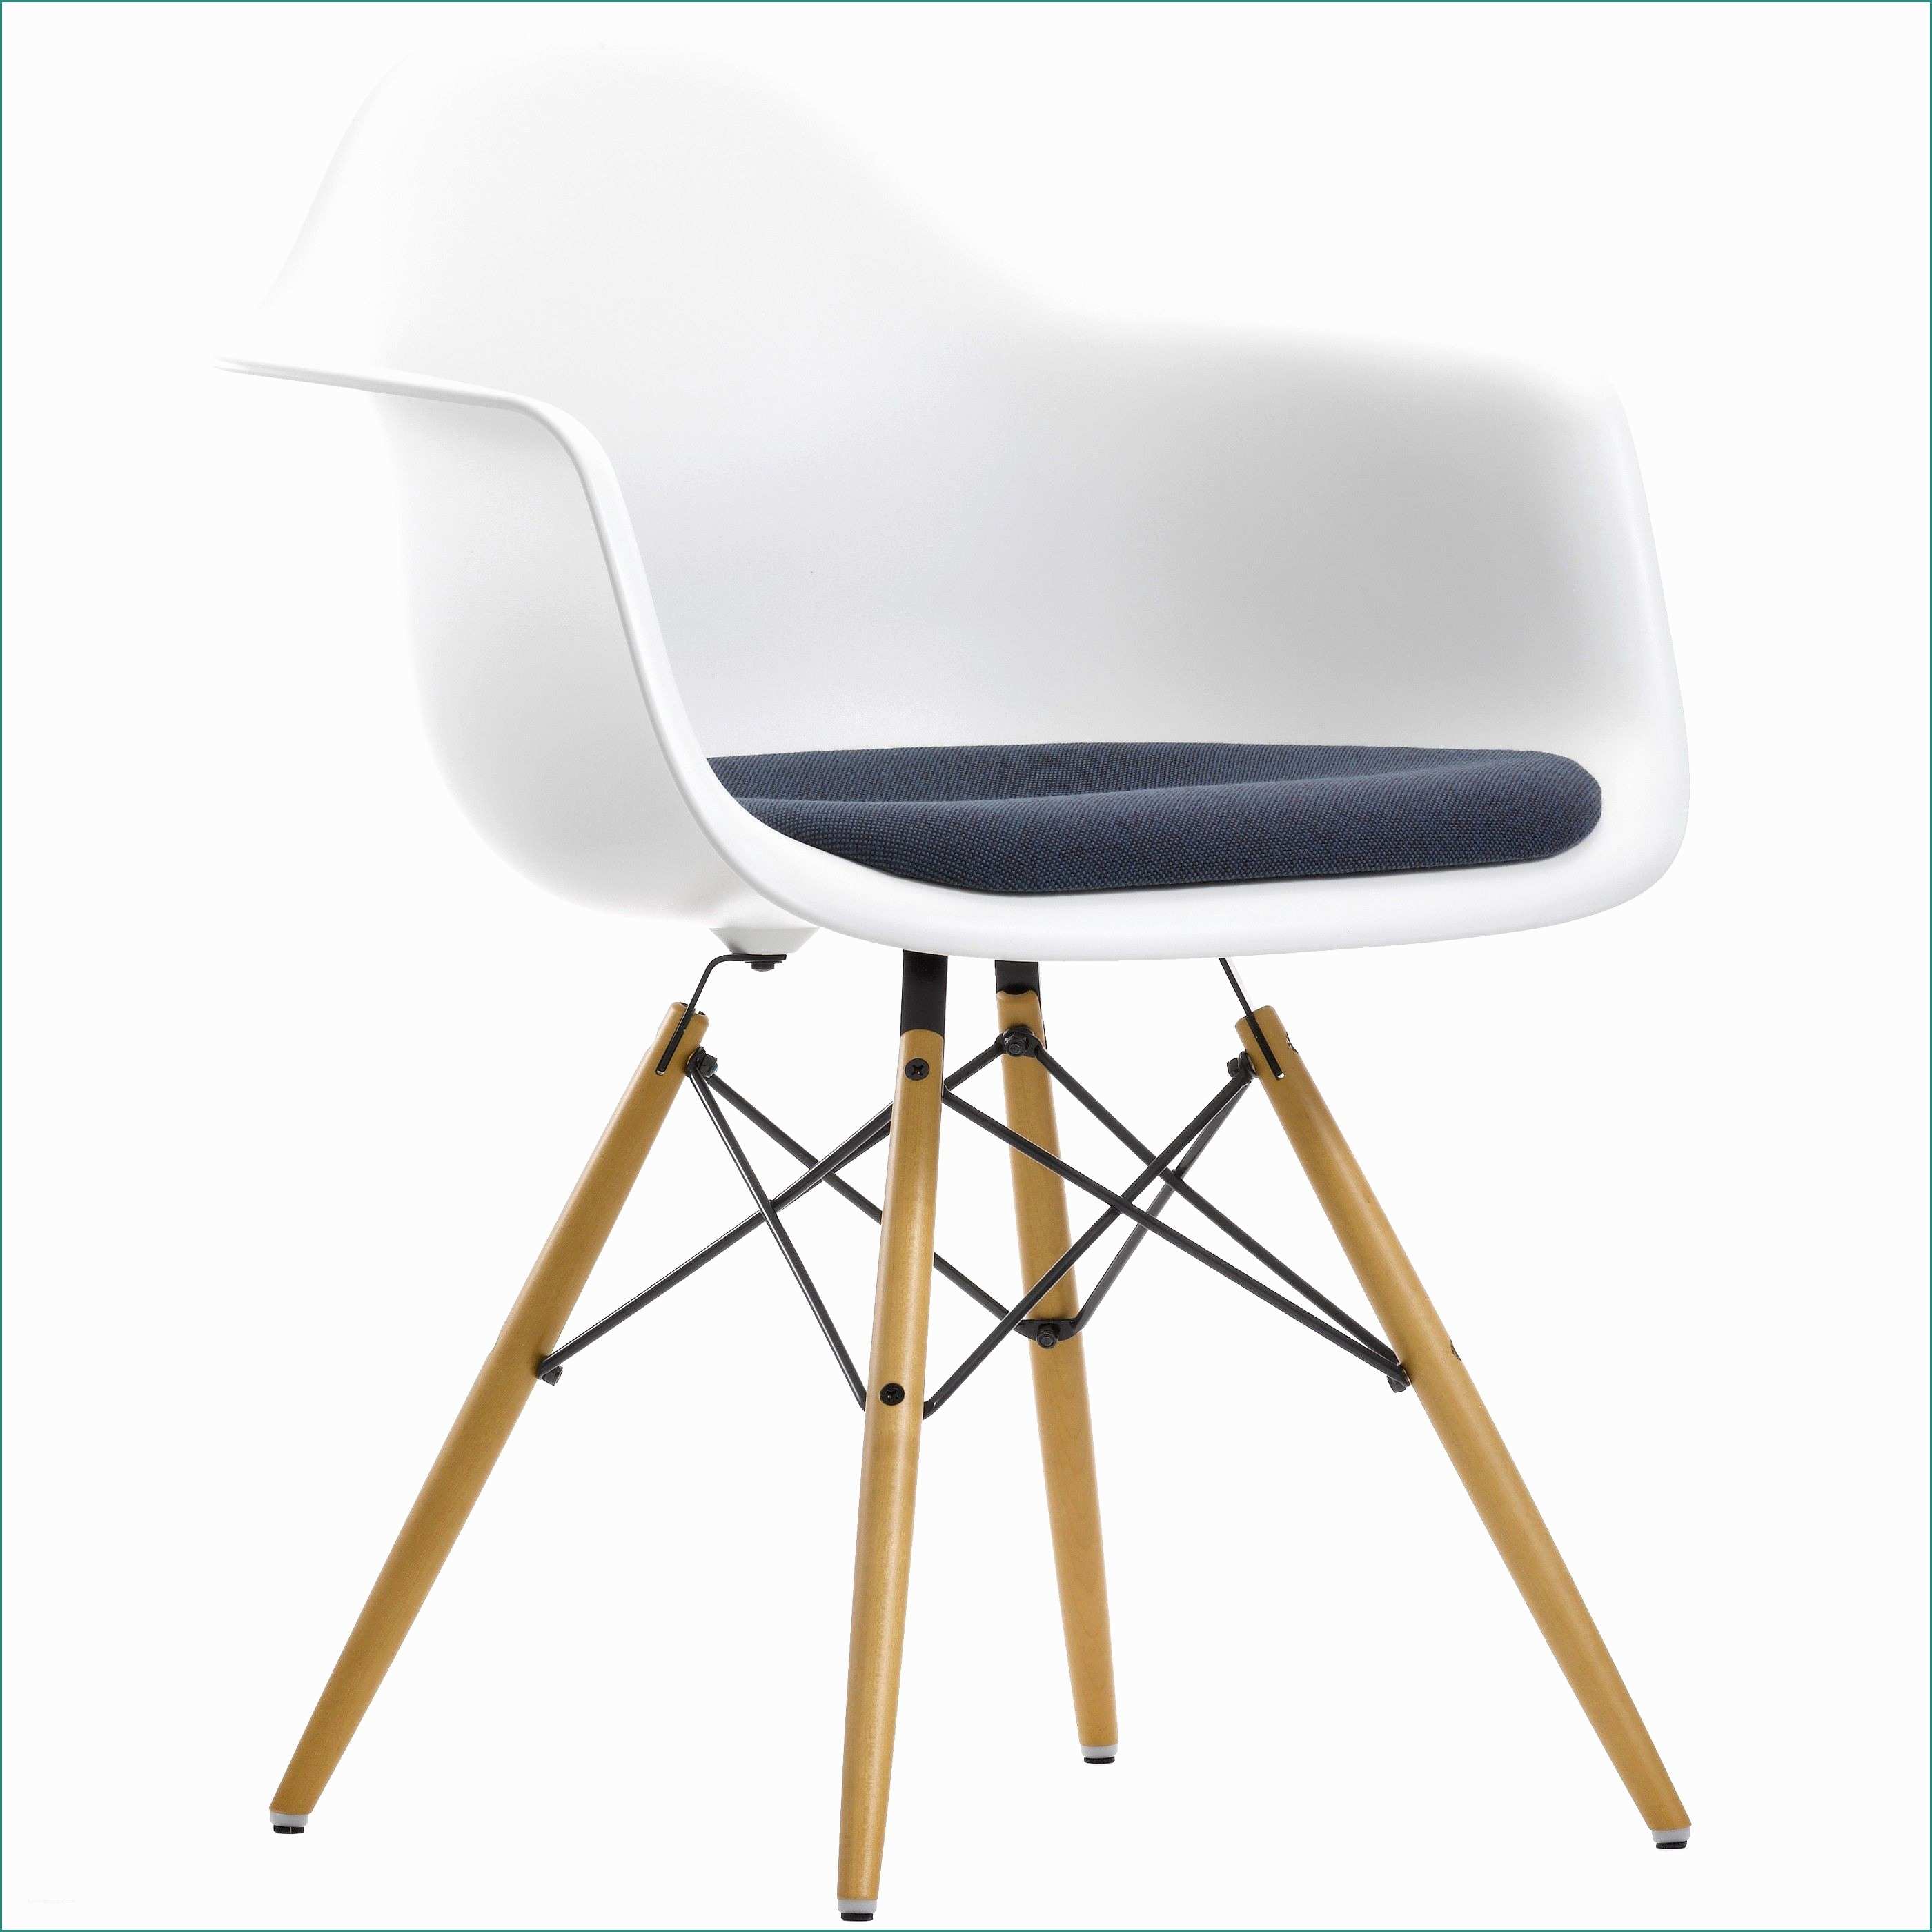 Sedia Eames Replica E Einzigartig Vitra Stuhl Nachbau Inspirierend Home Ideen